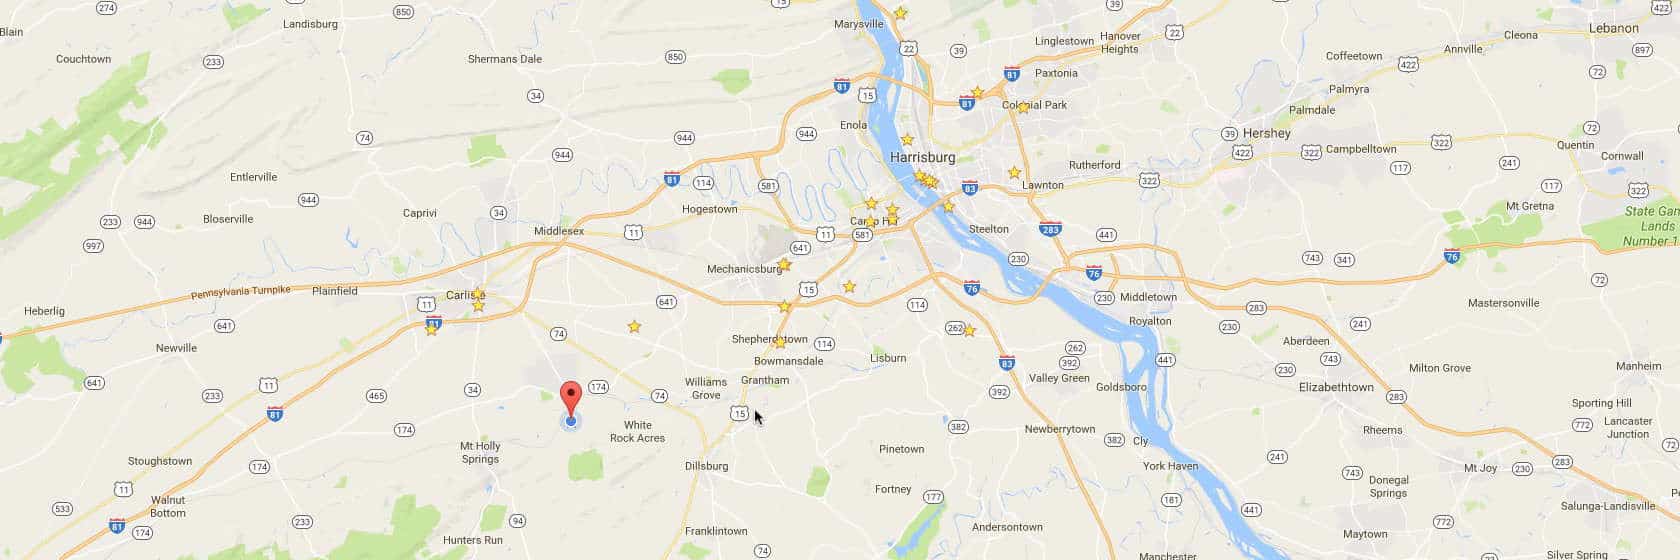 Screenshot of Google Maps showing Central Pennsylvania